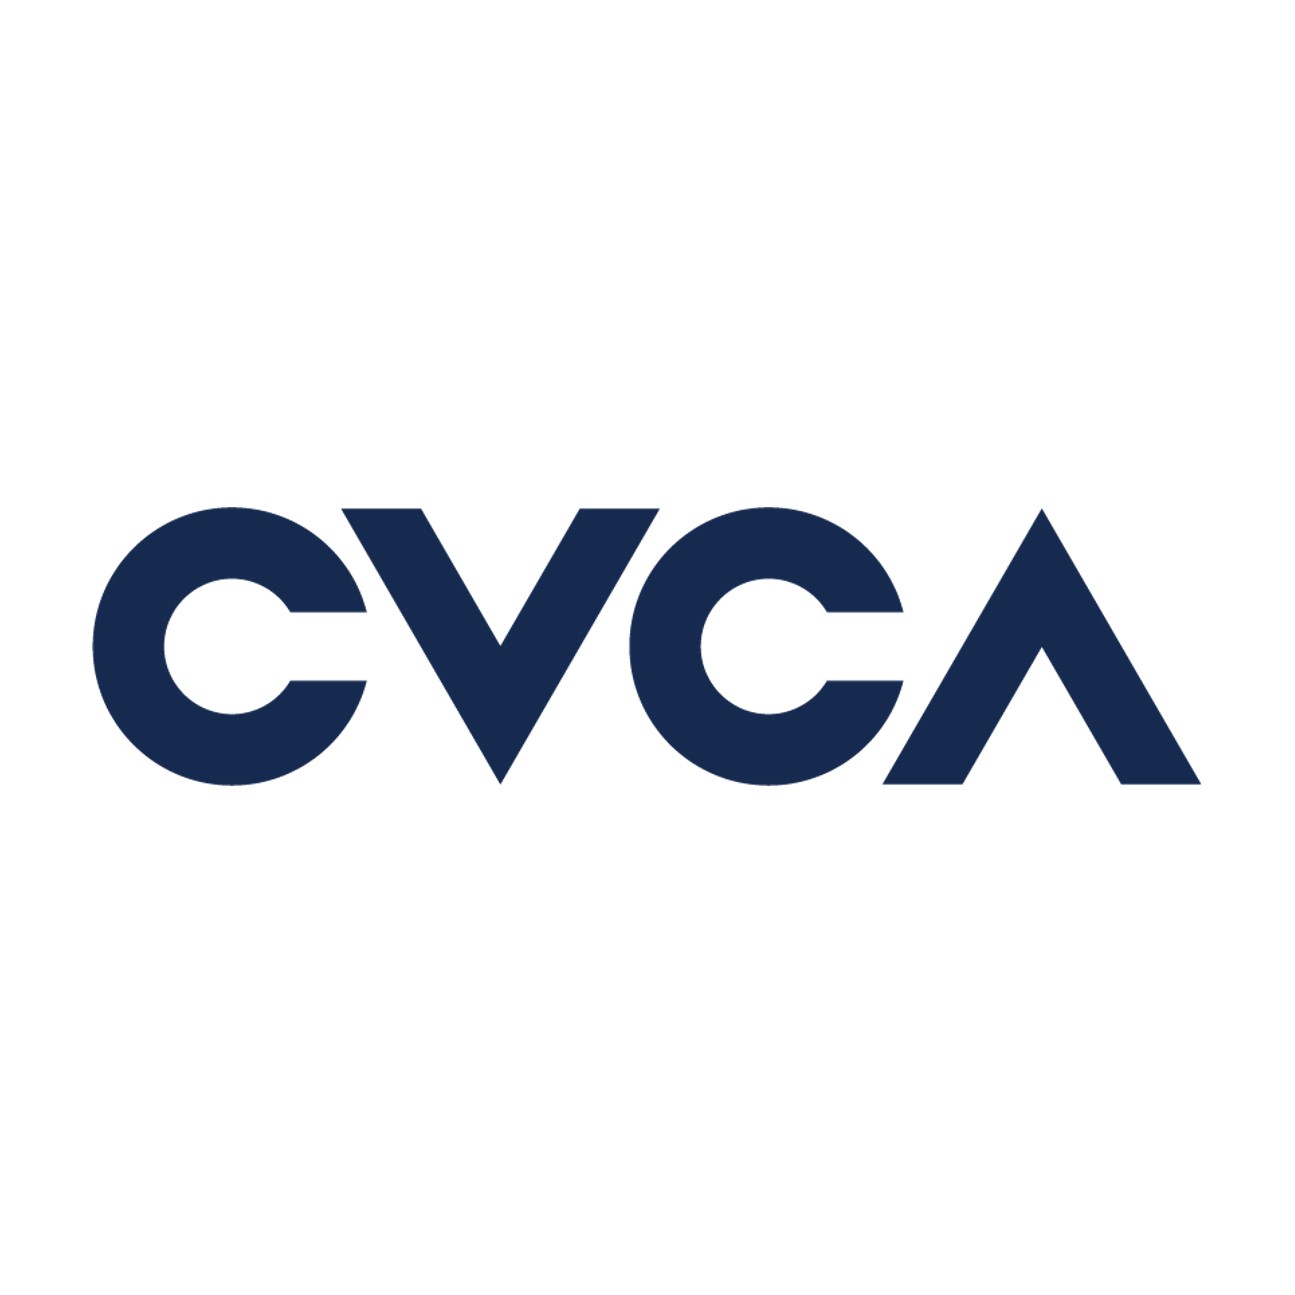 Canadian Venture Capital & Private Equity Association (CVCA)